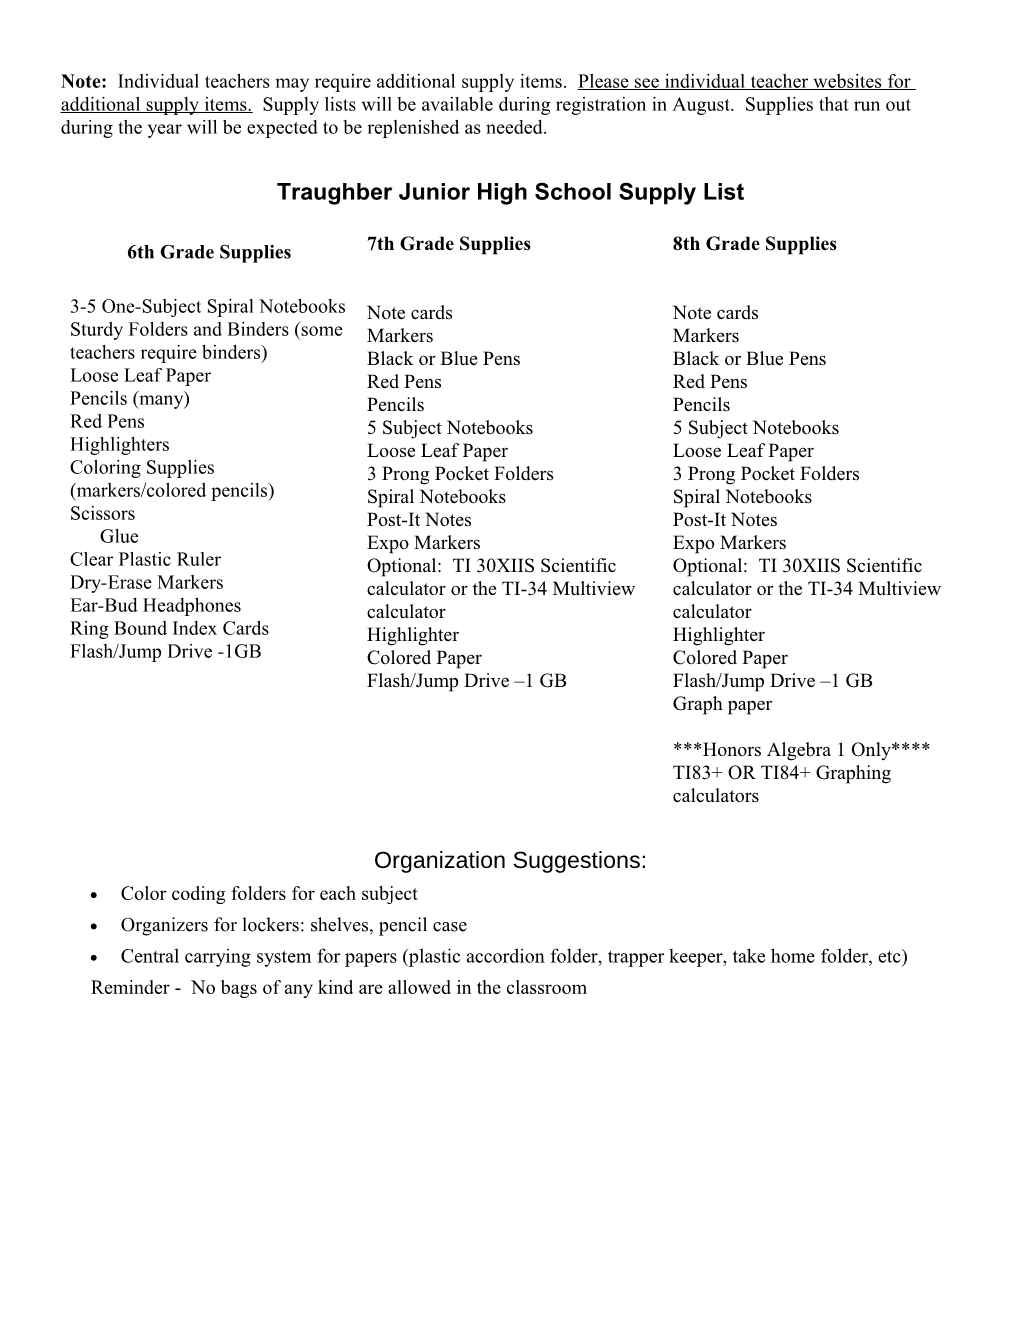 Traughber Junior High School Supply List